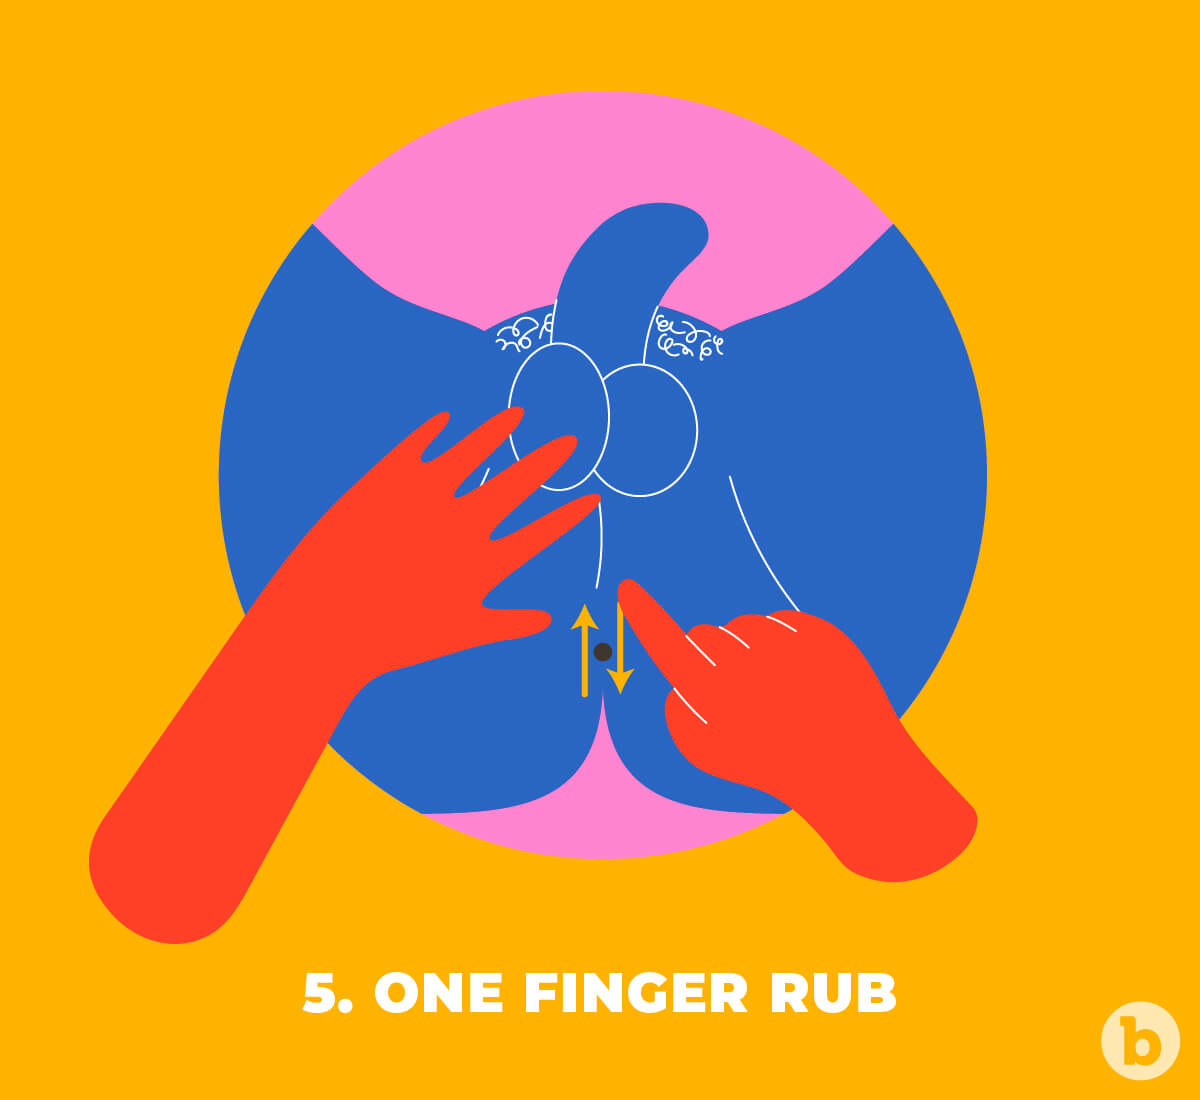 A finger rubbing the anus vigorously for sexual pleasure